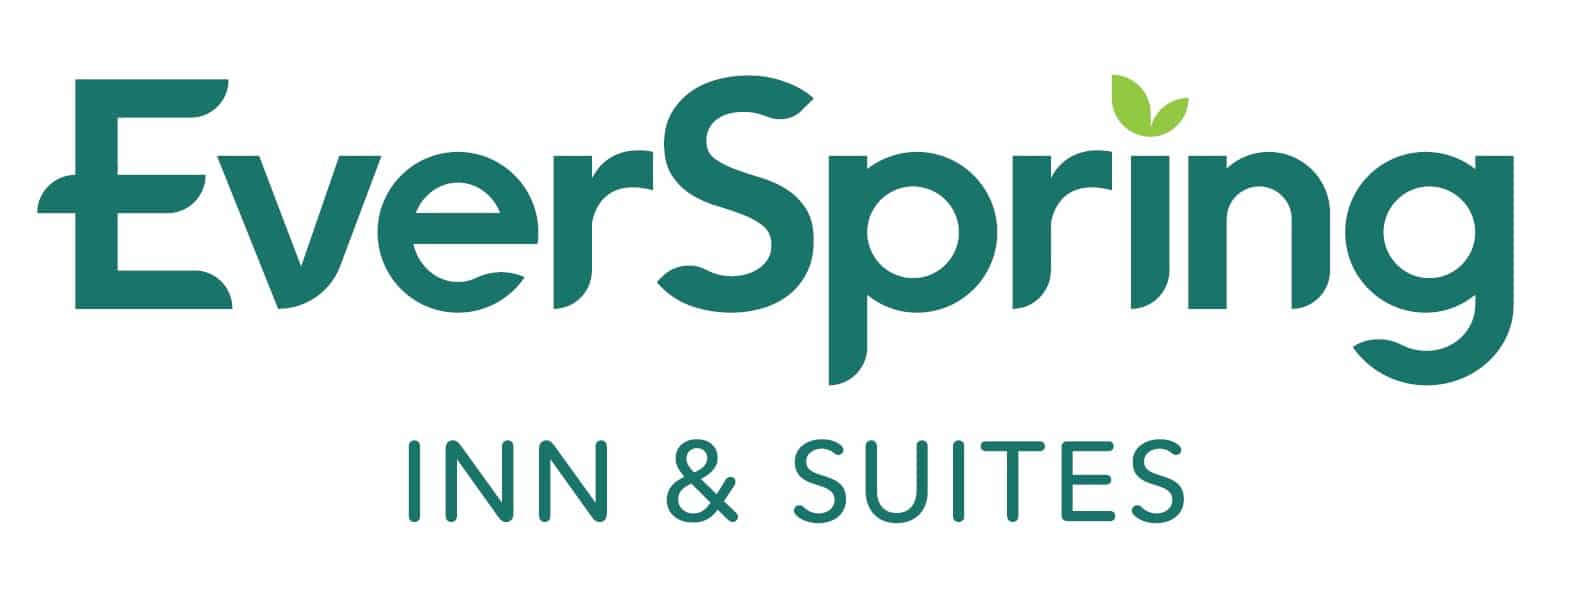 Everspring Inn & Suites logo